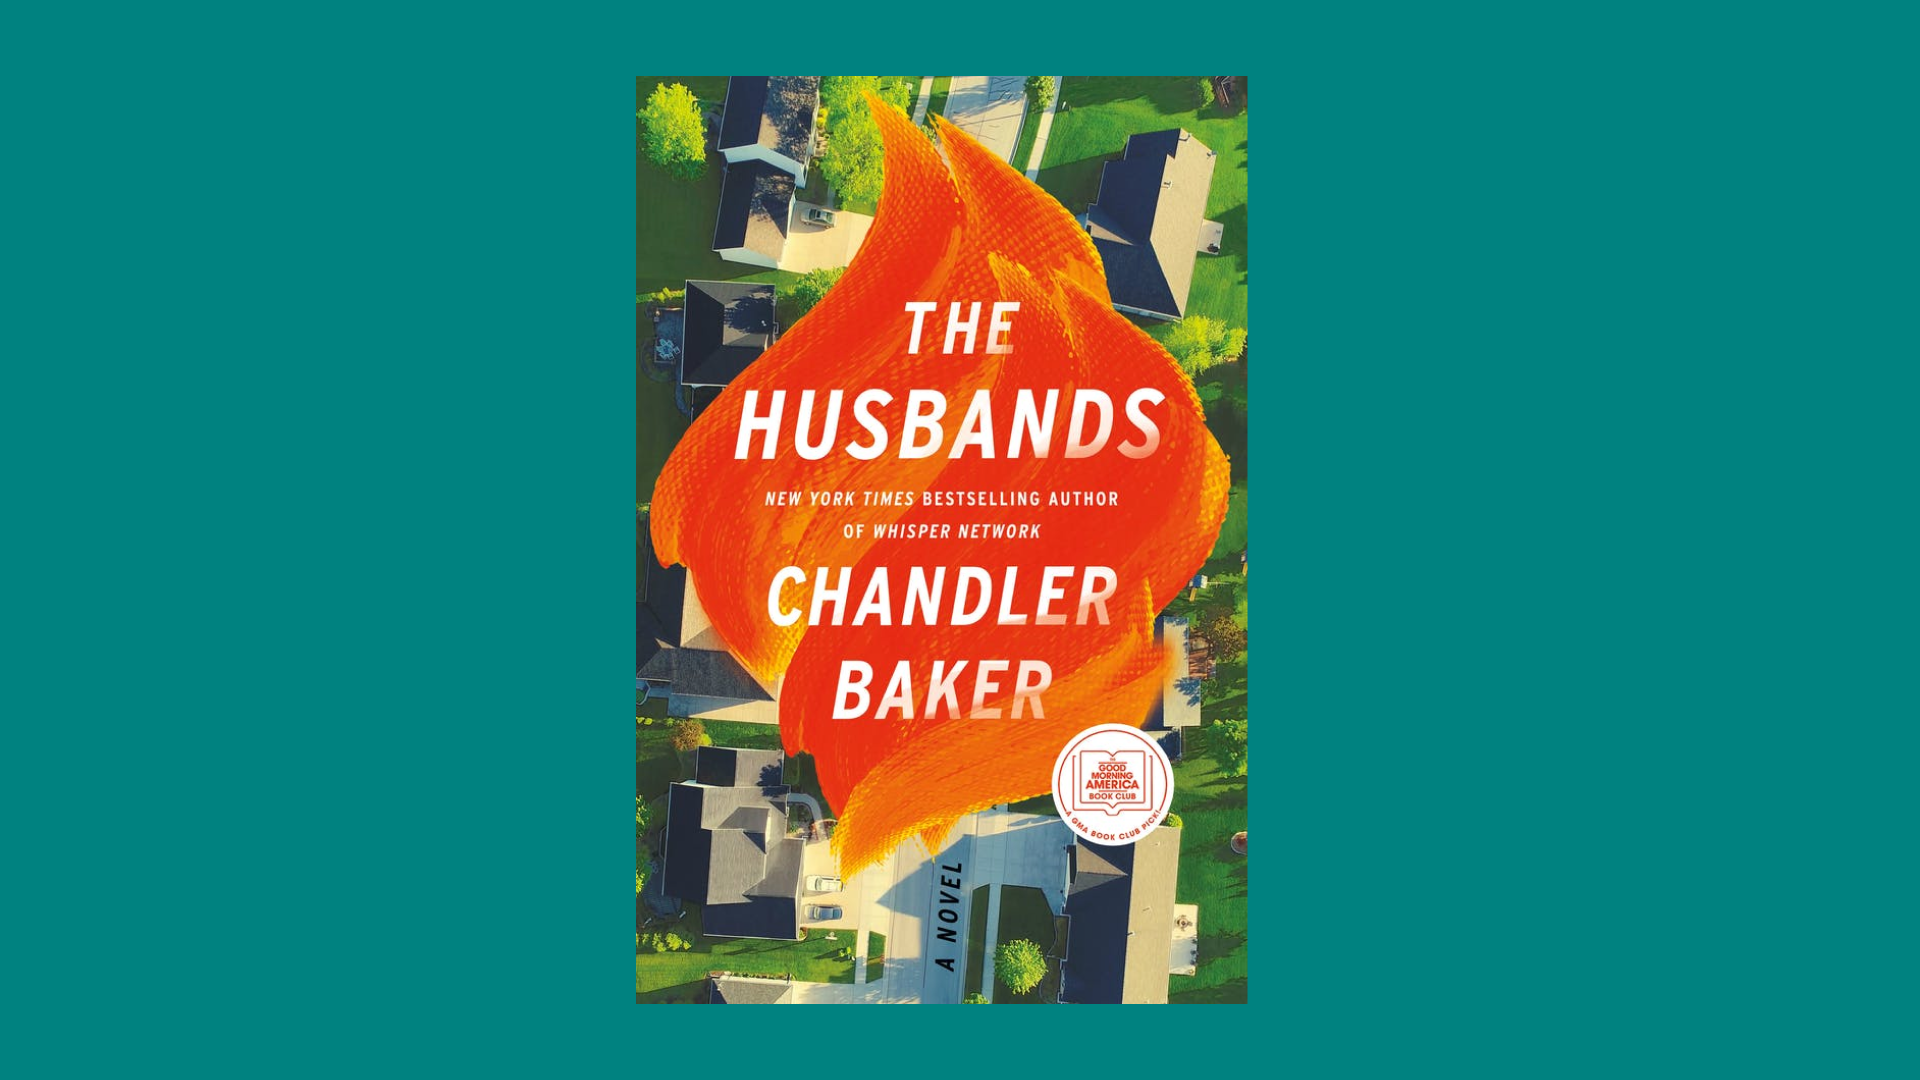 “The Husbands” by Chandler Baker